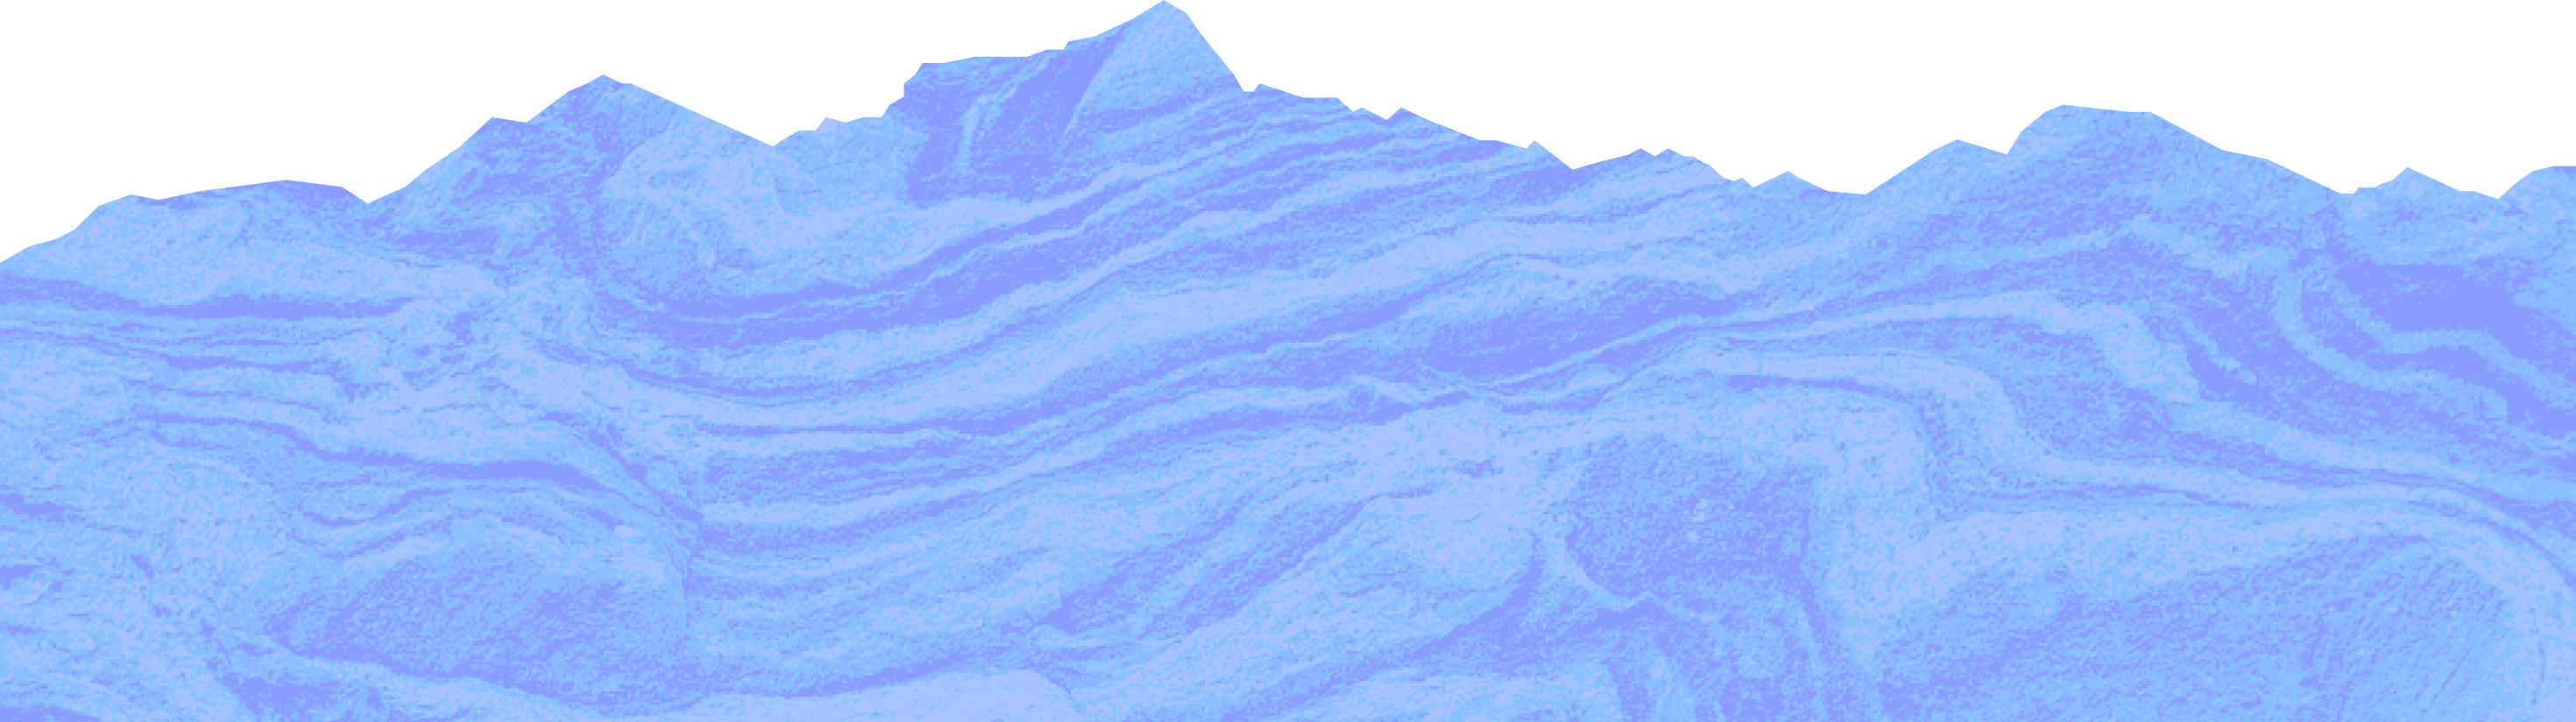 mountain-layer